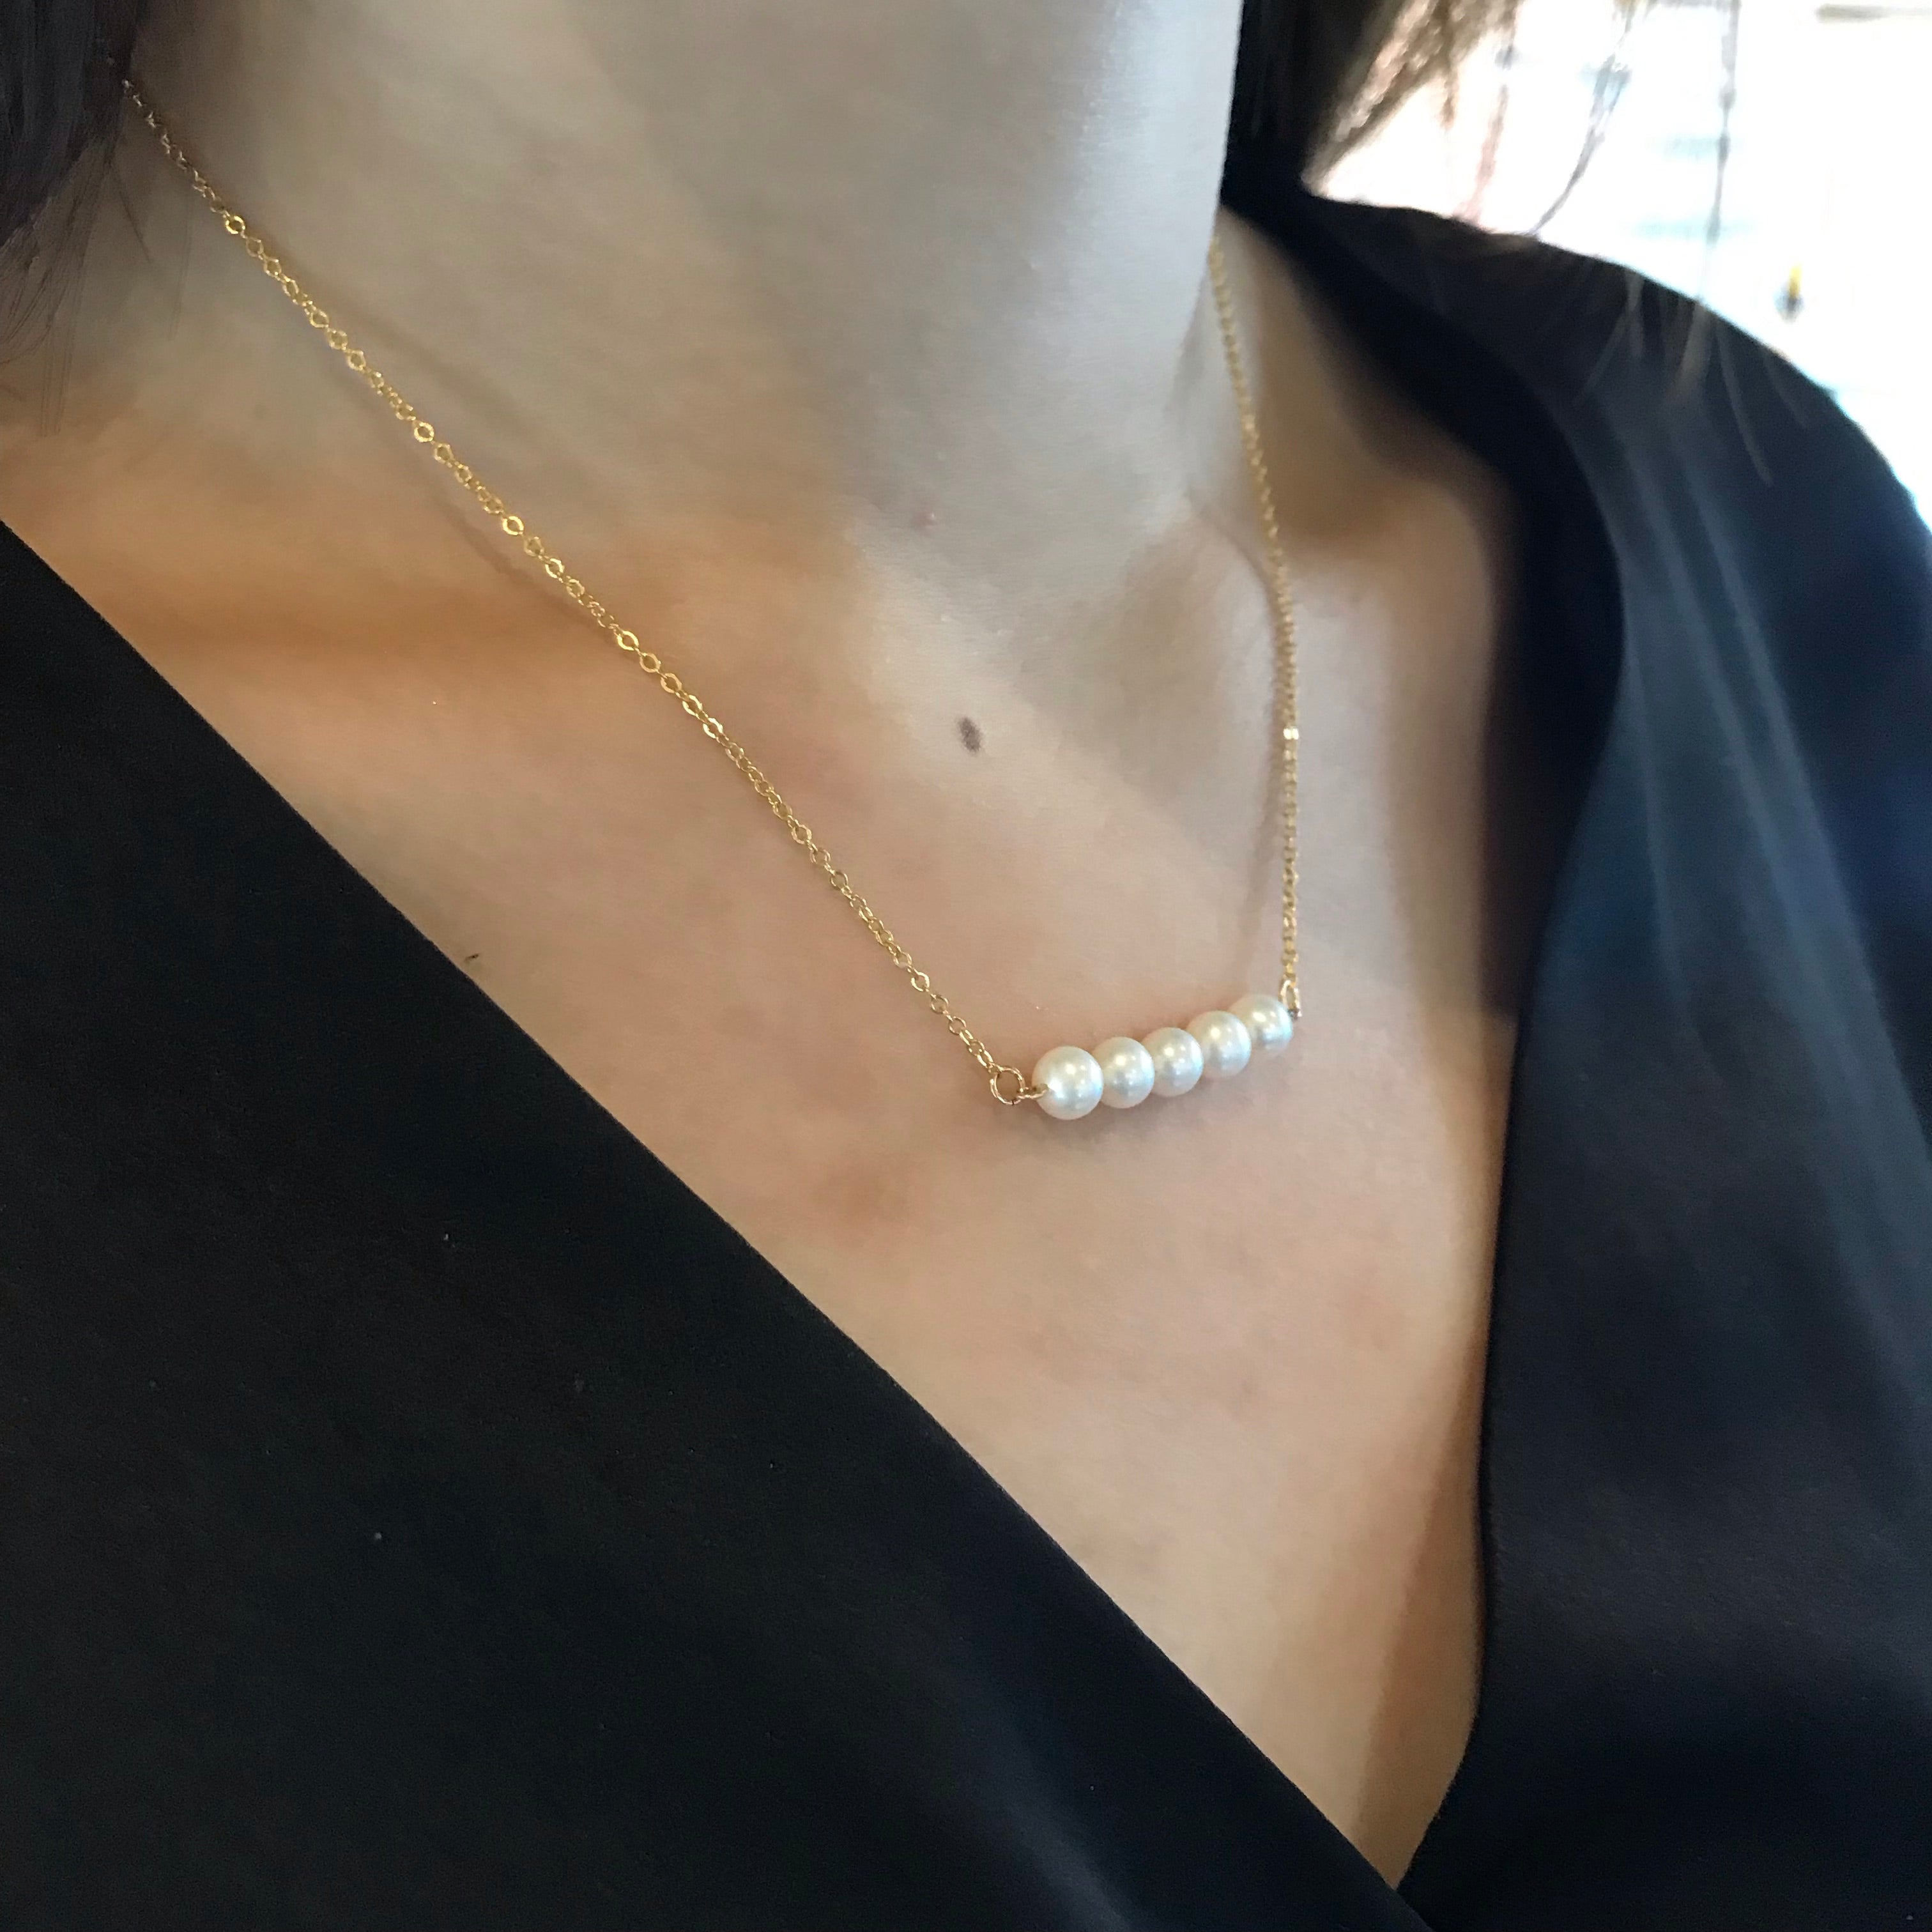 Iyla' Doublet Opal Necklace in 14ct Gold - Black Star Opal